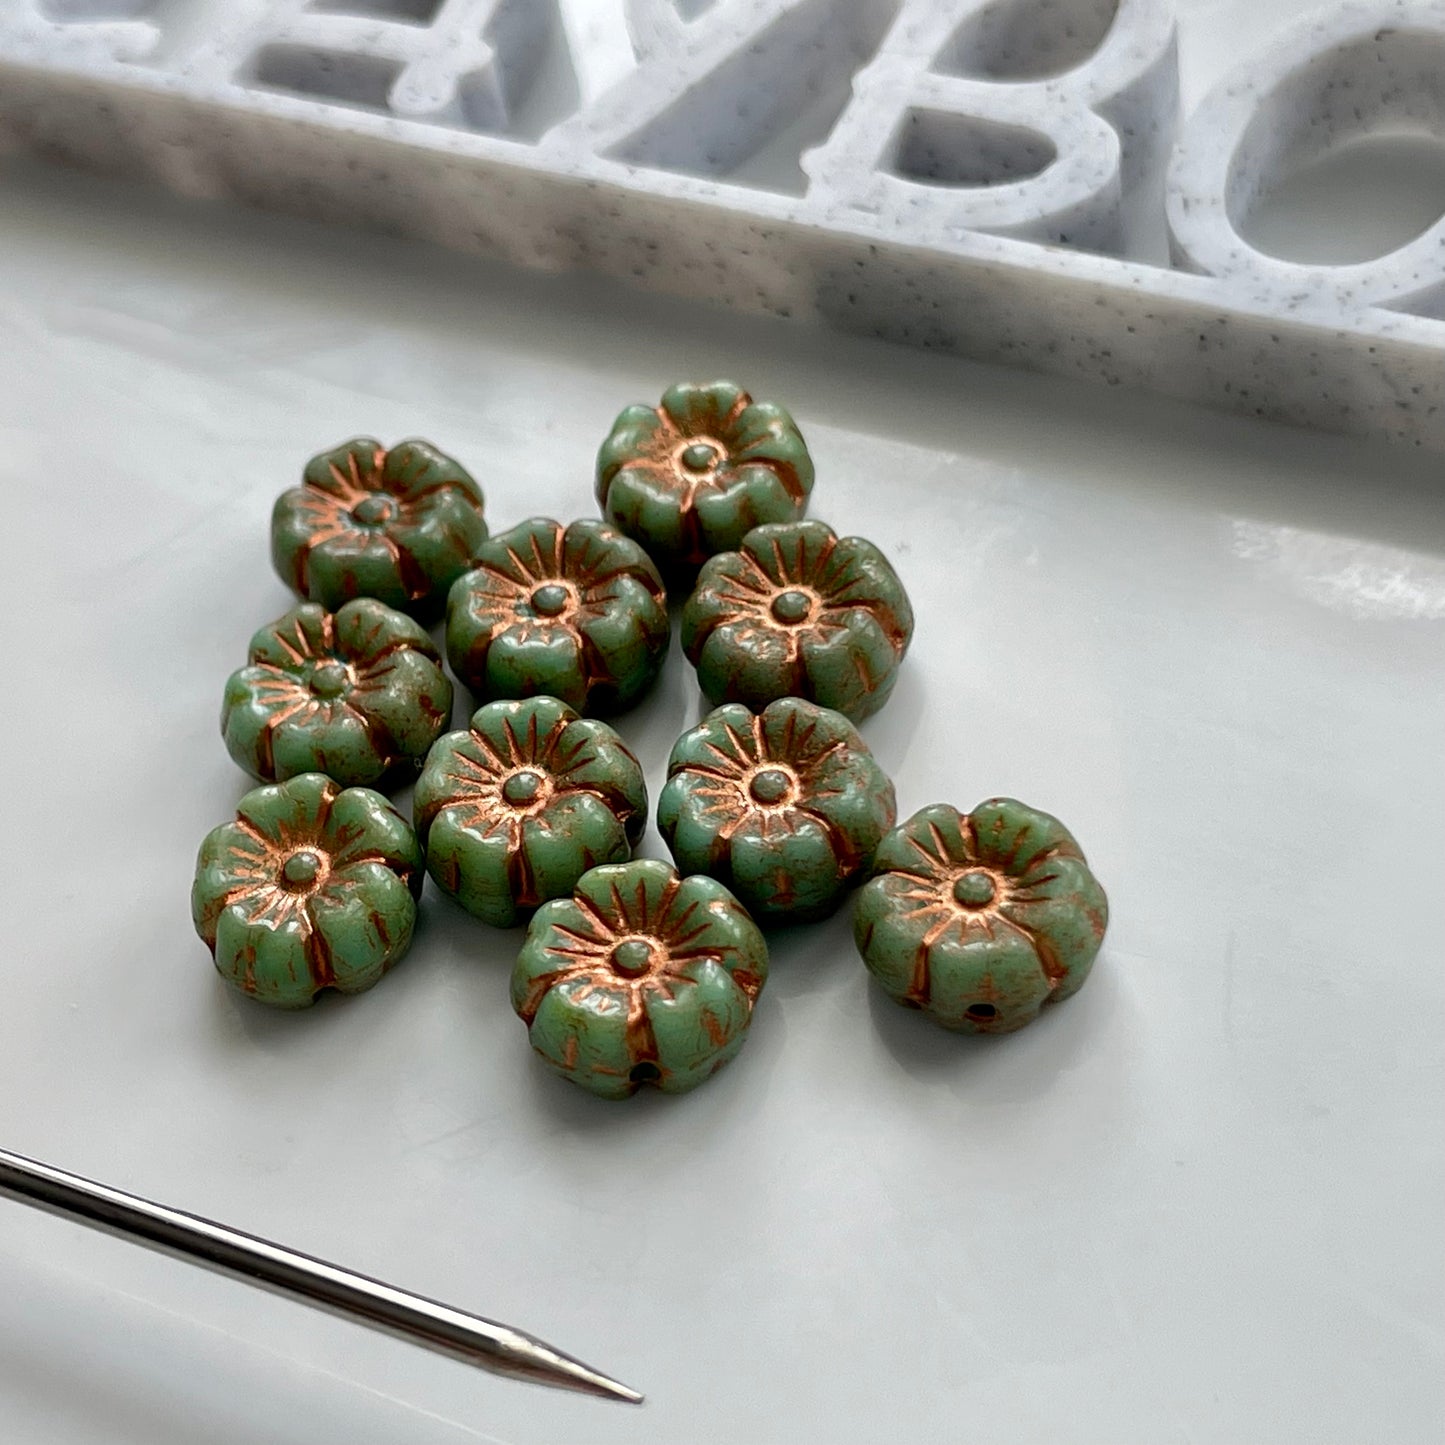 Czech Pressed Glass Flower Beads - 10 pieces